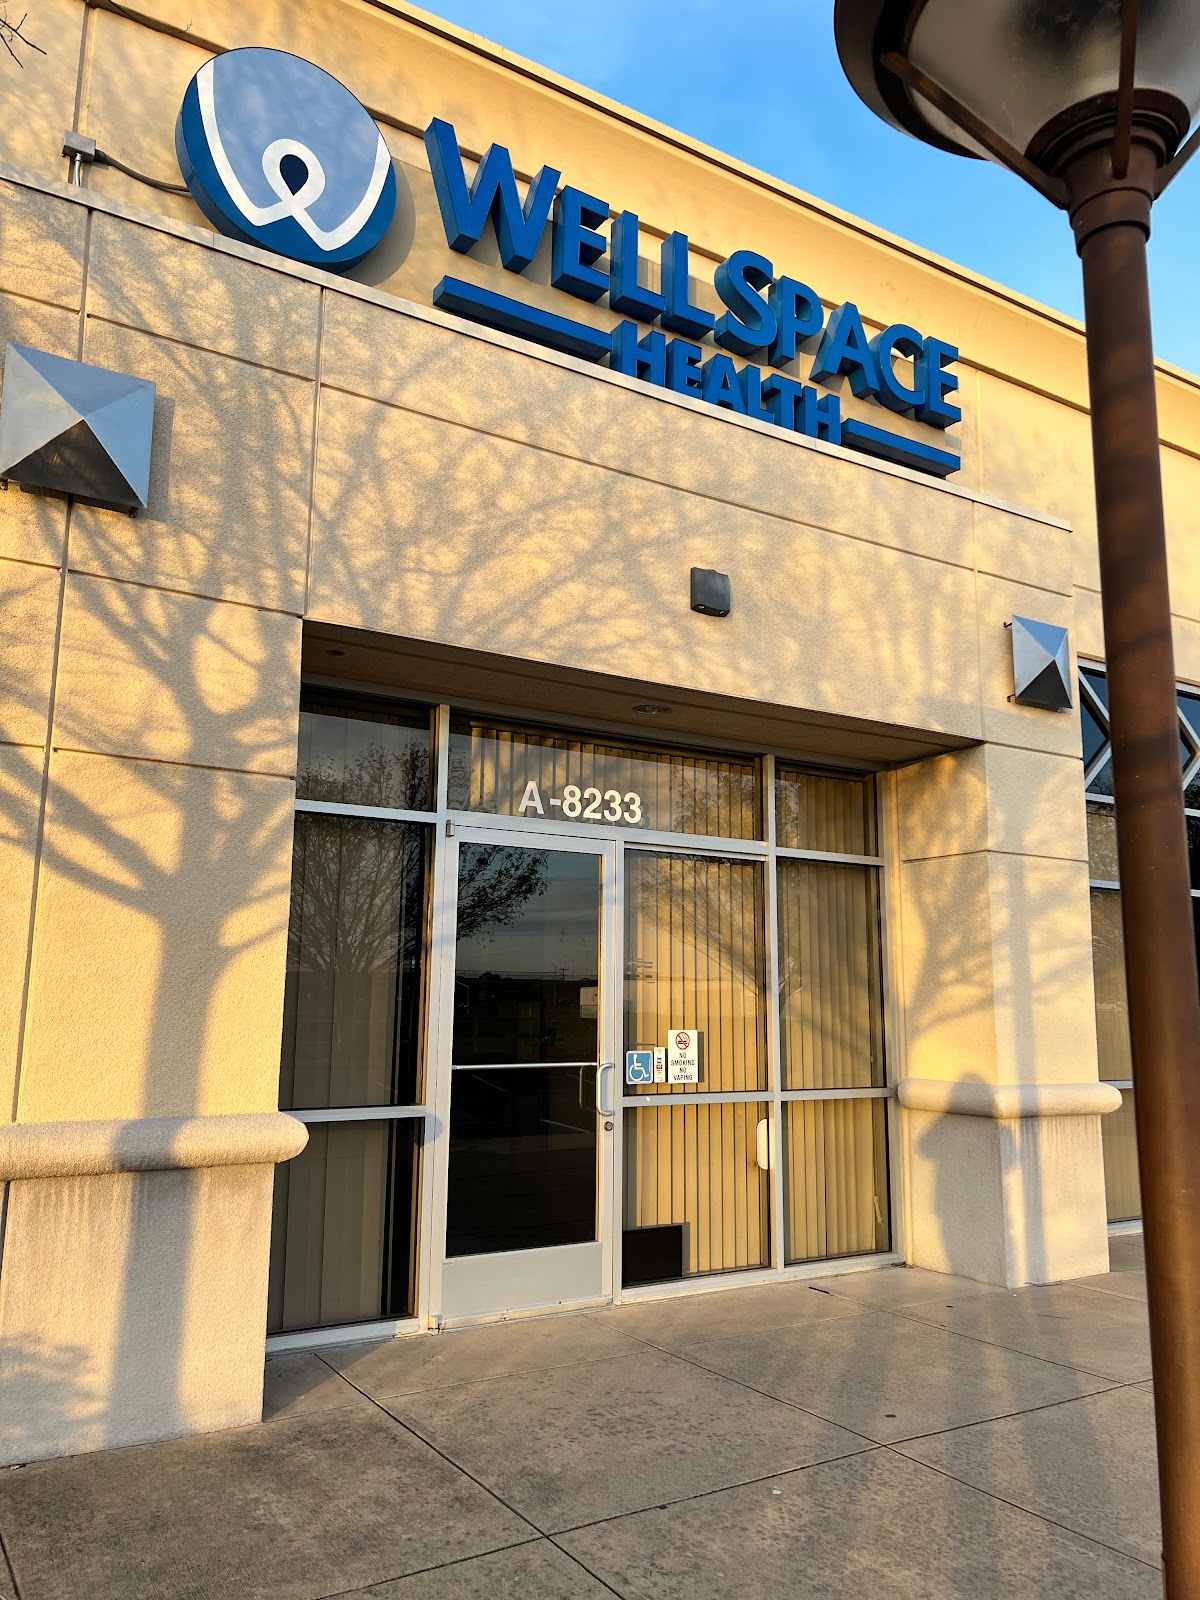 WellSpace Community Health Center